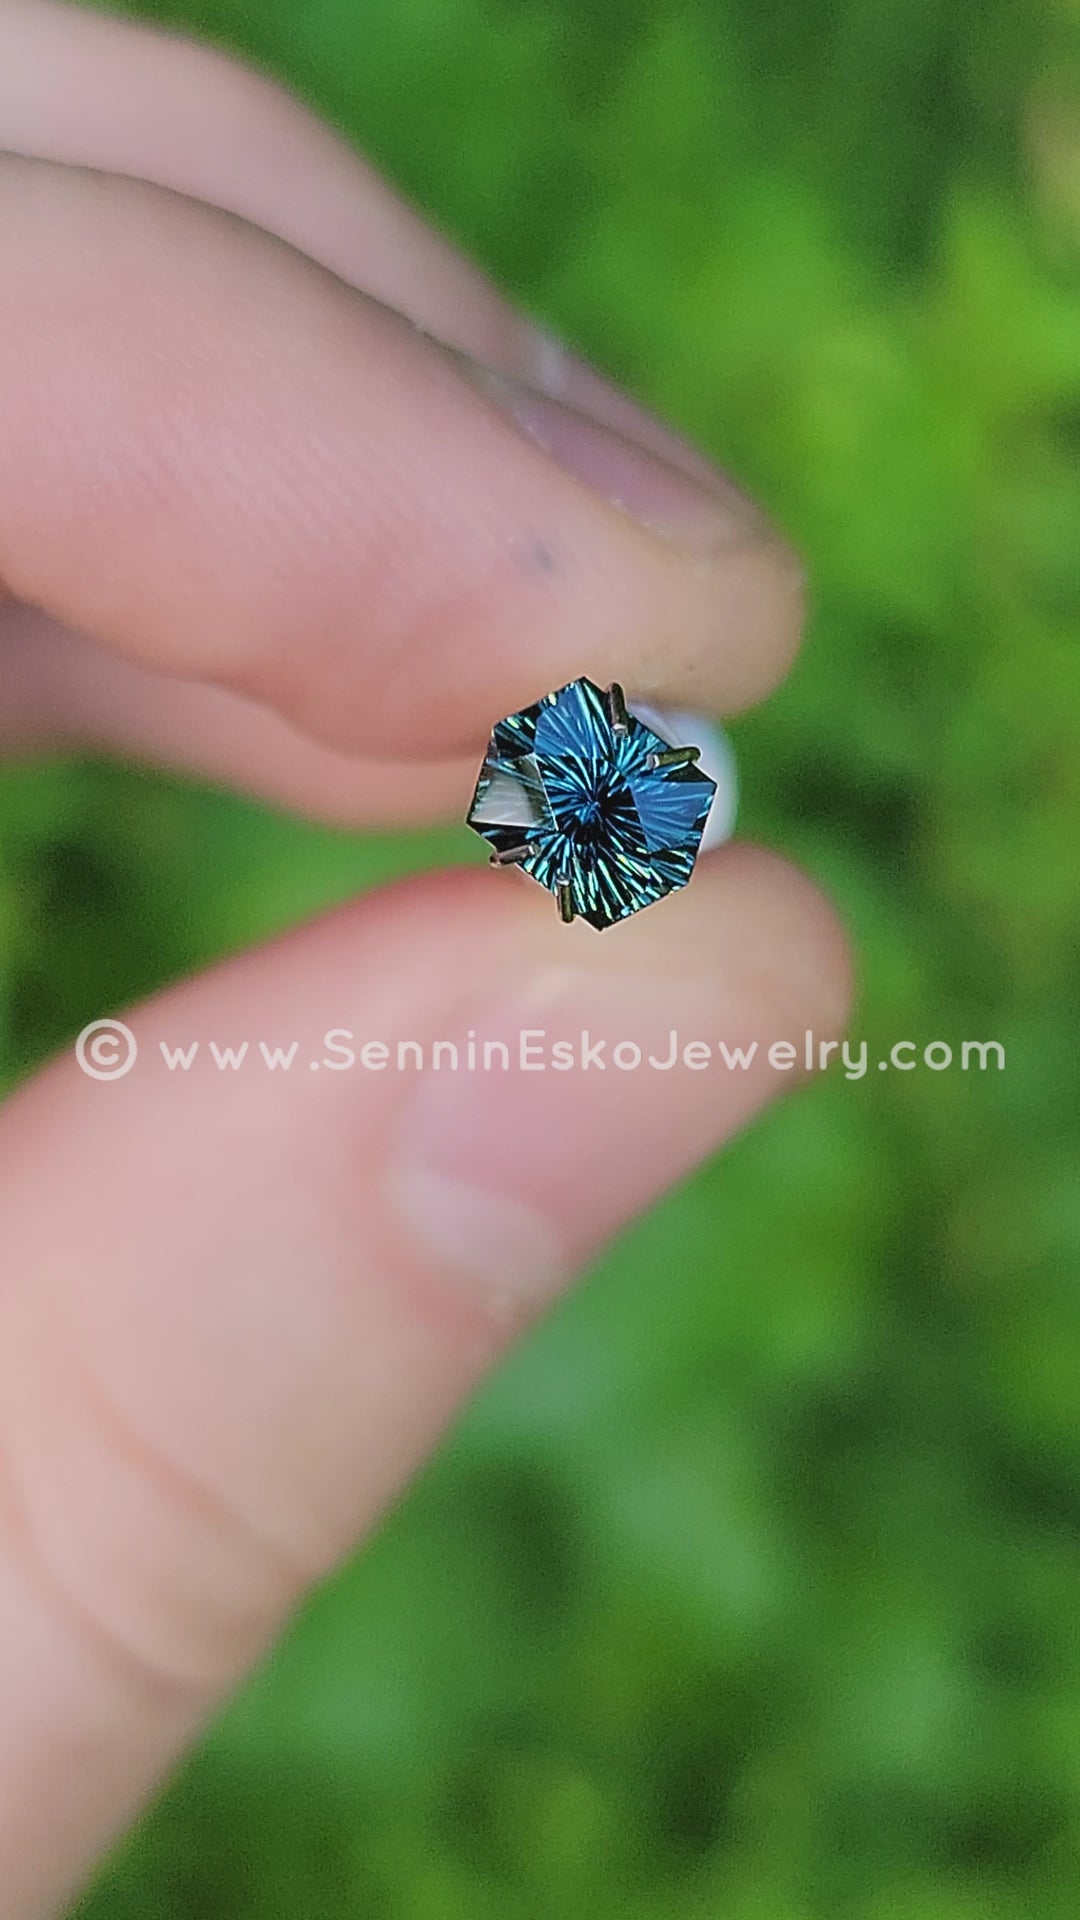 1.37 Carat Blue & Green Sapphire Hexagon - 7.3x5.5mm, Fantasy Cut